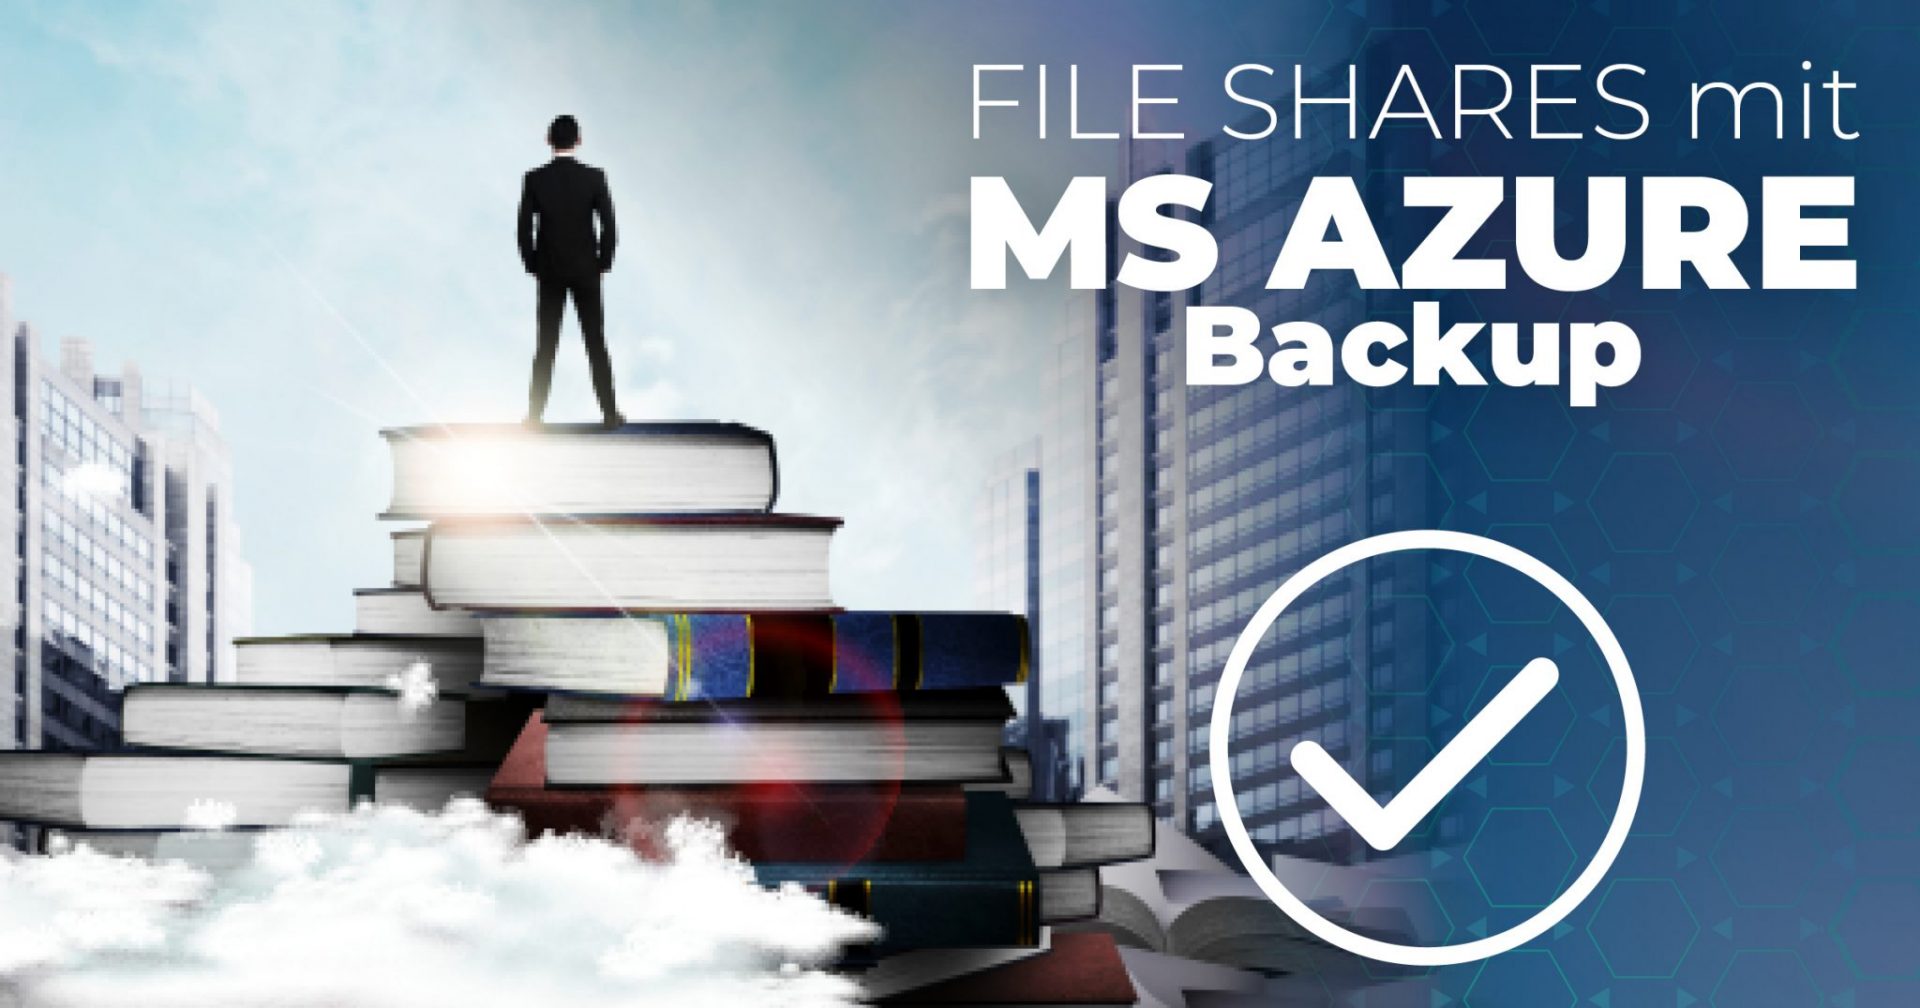 Azure Backup für Azure Files Shares